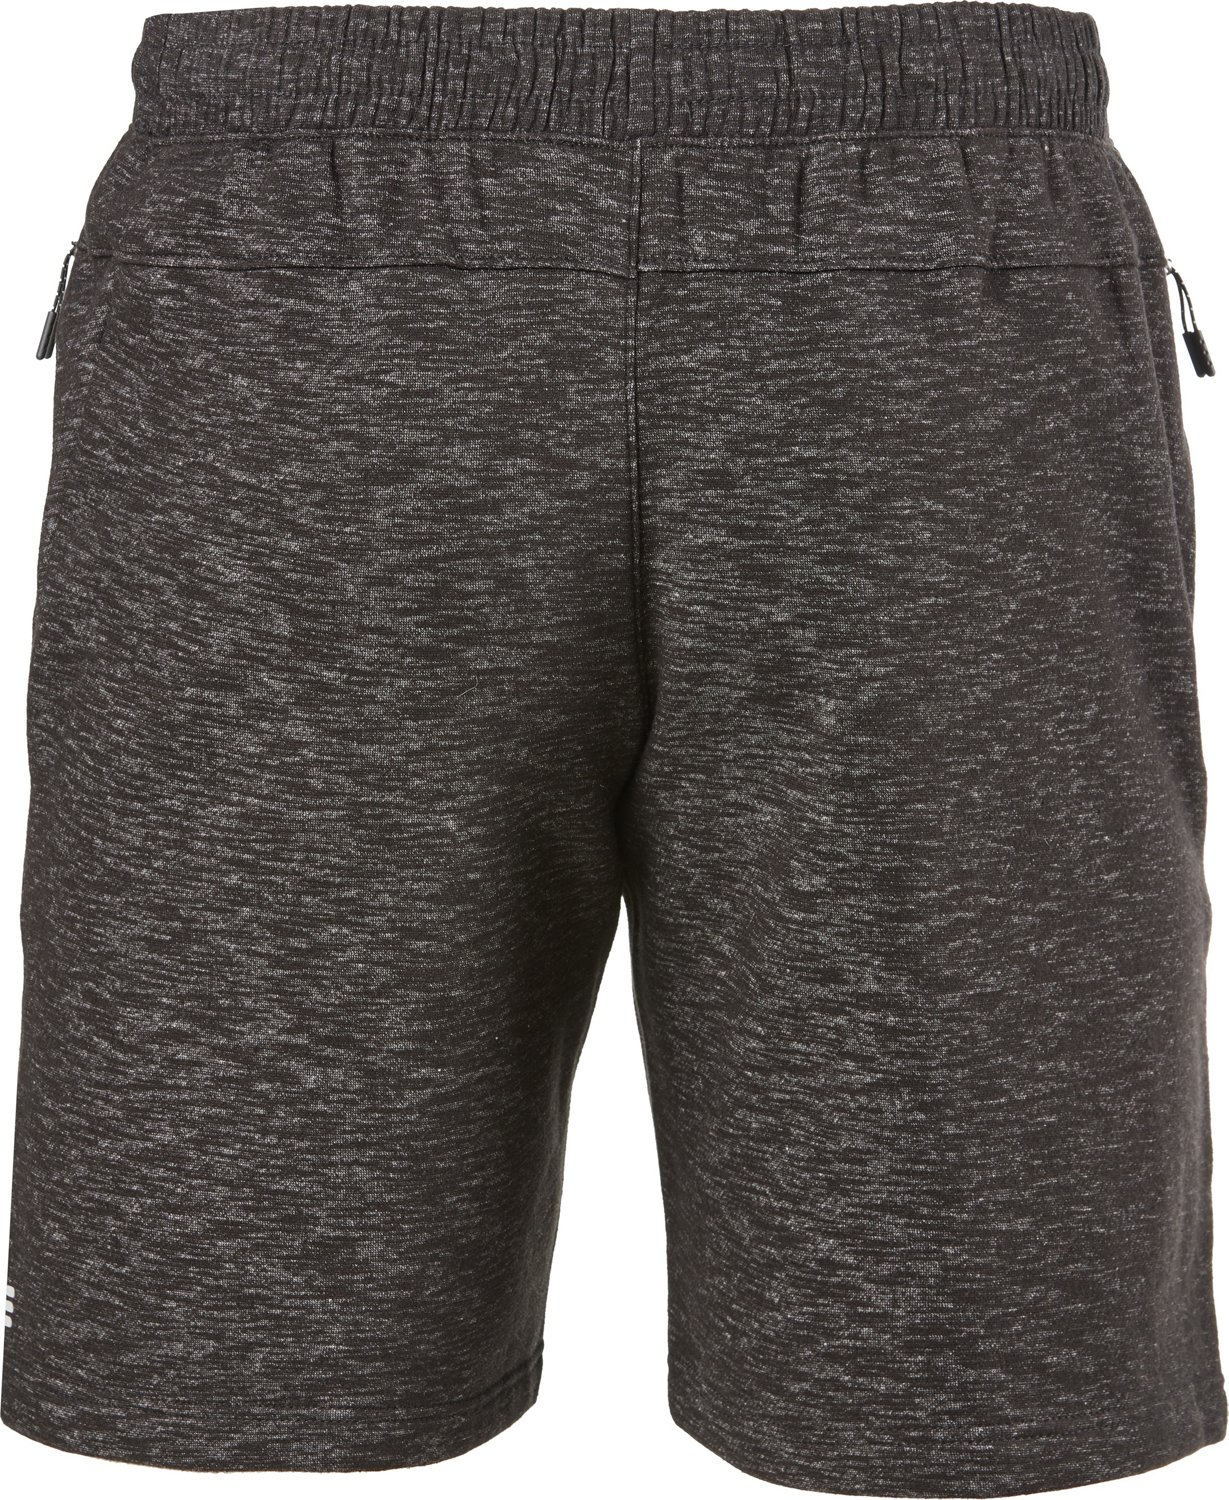 BCG Men's Lifestyle Cotton Fleece Shorts 10 in